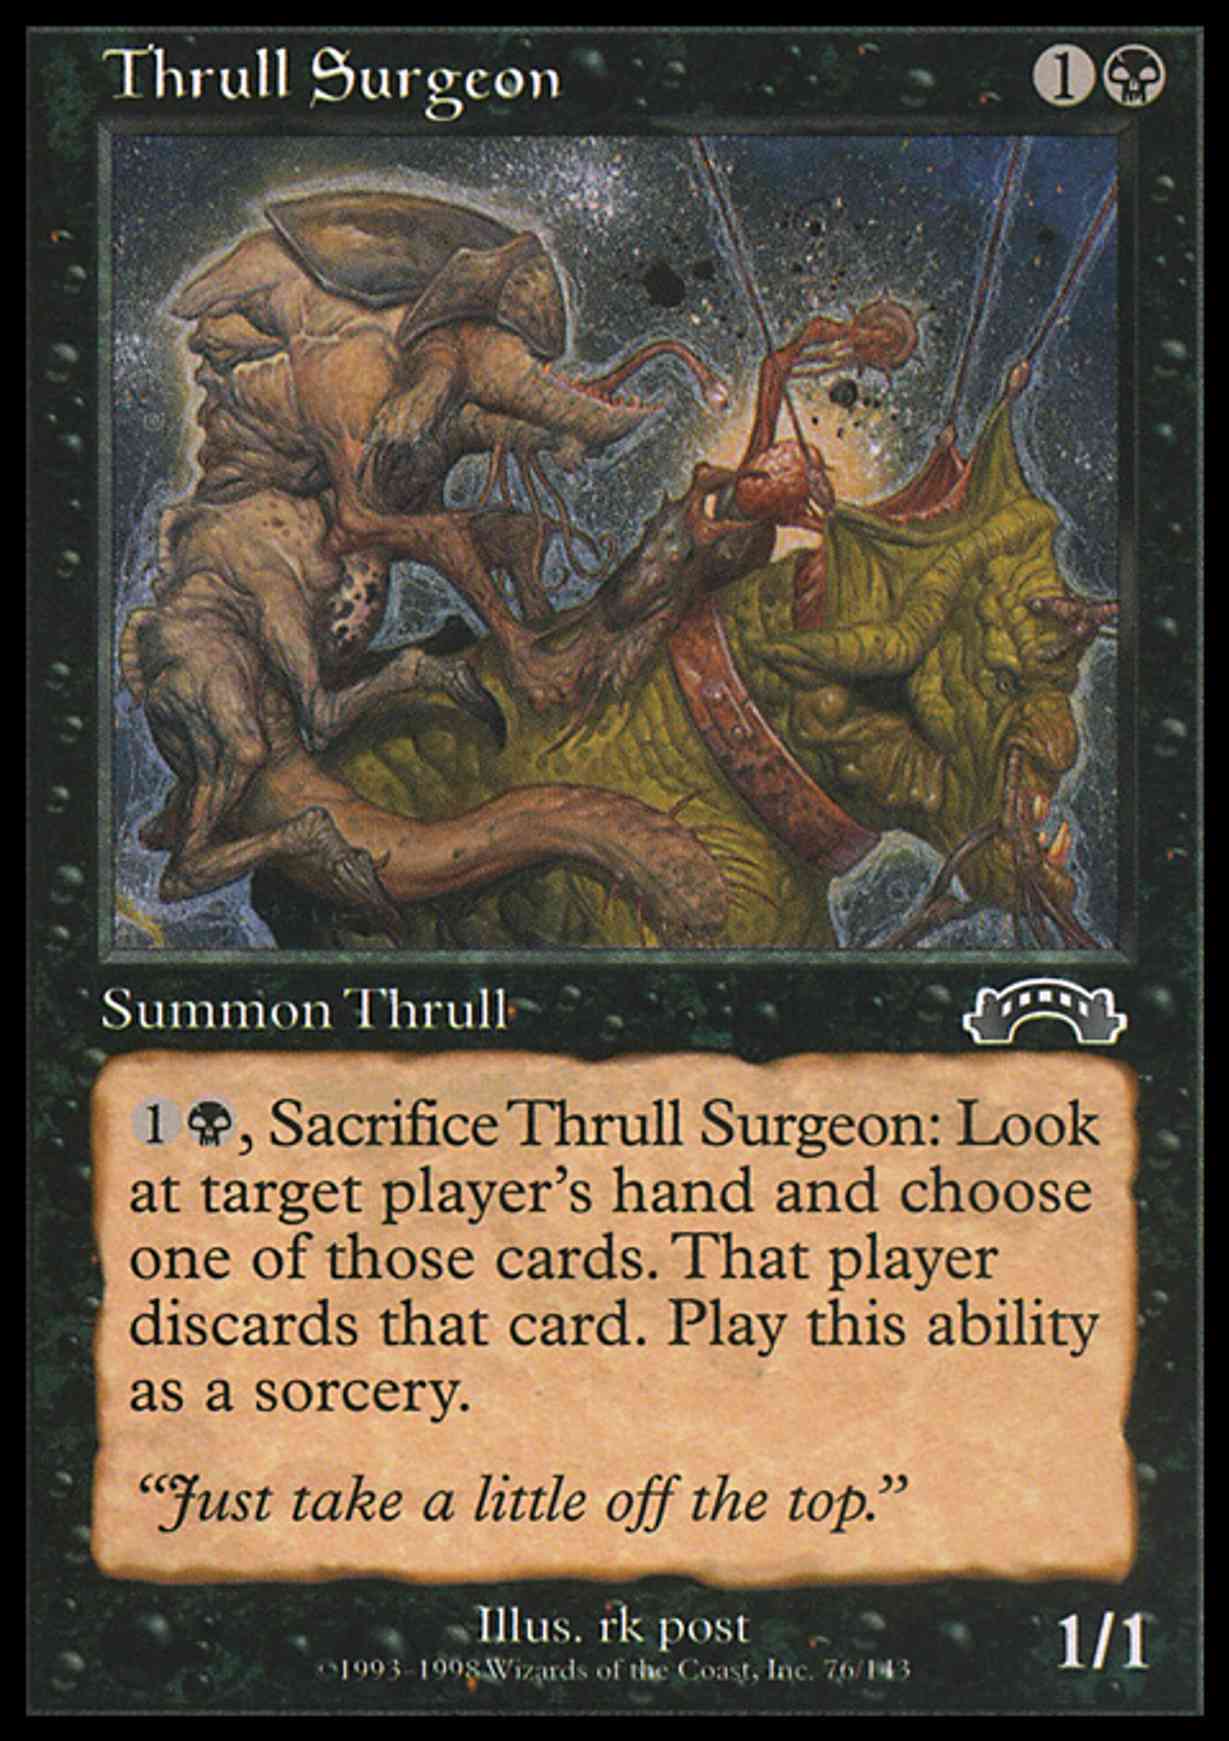 Thrull Surgeon magic card front